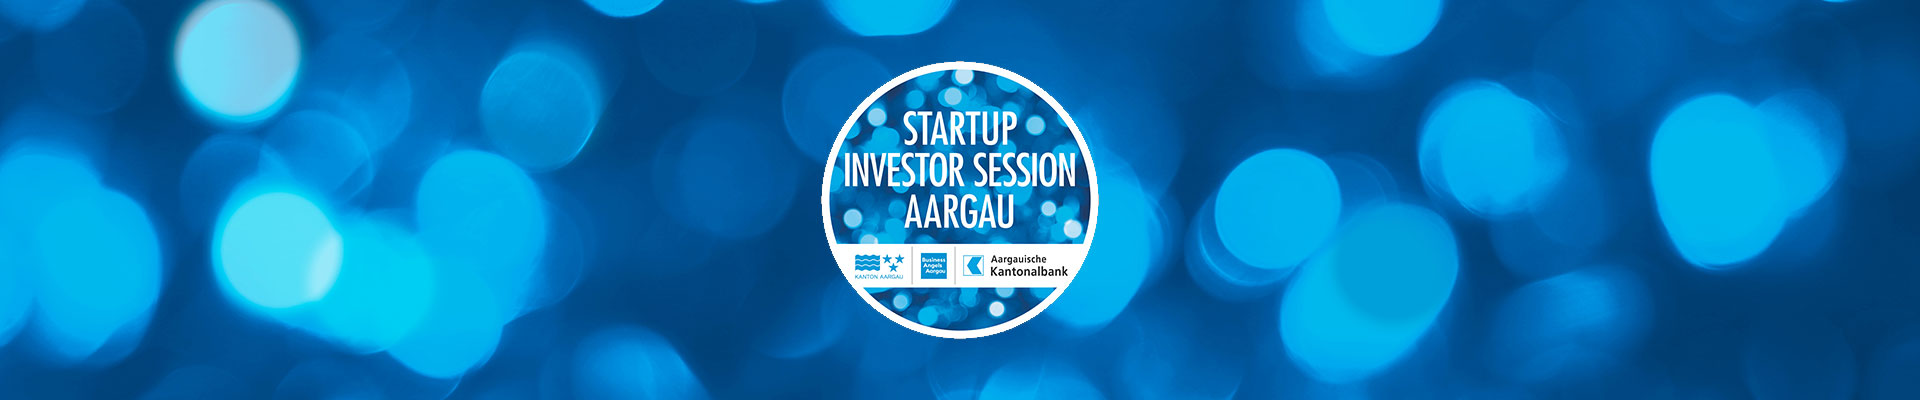 3. Startup Investor Session Aargau